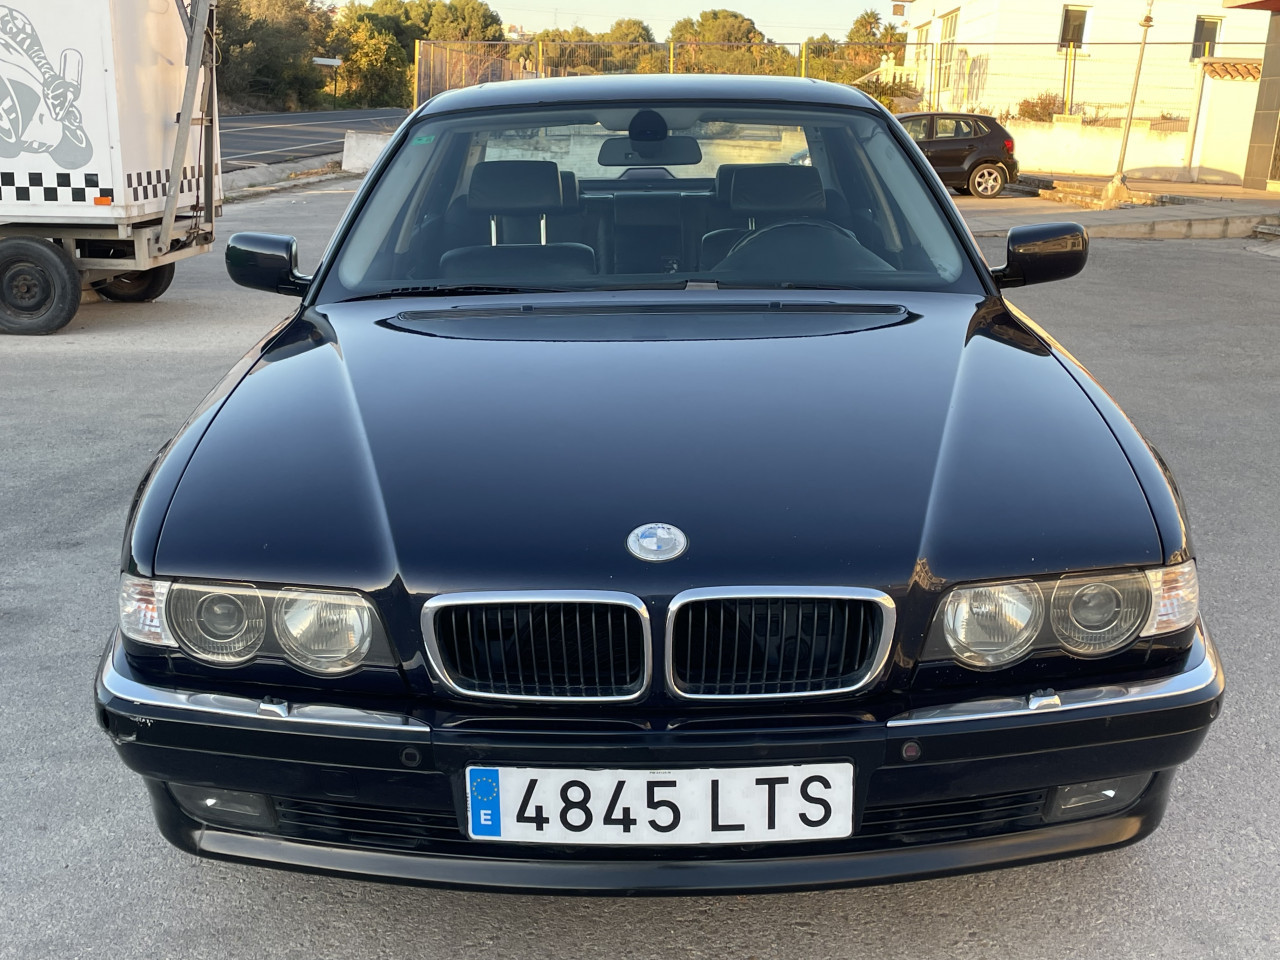 BMW 730D Automatic Saloon 1999 